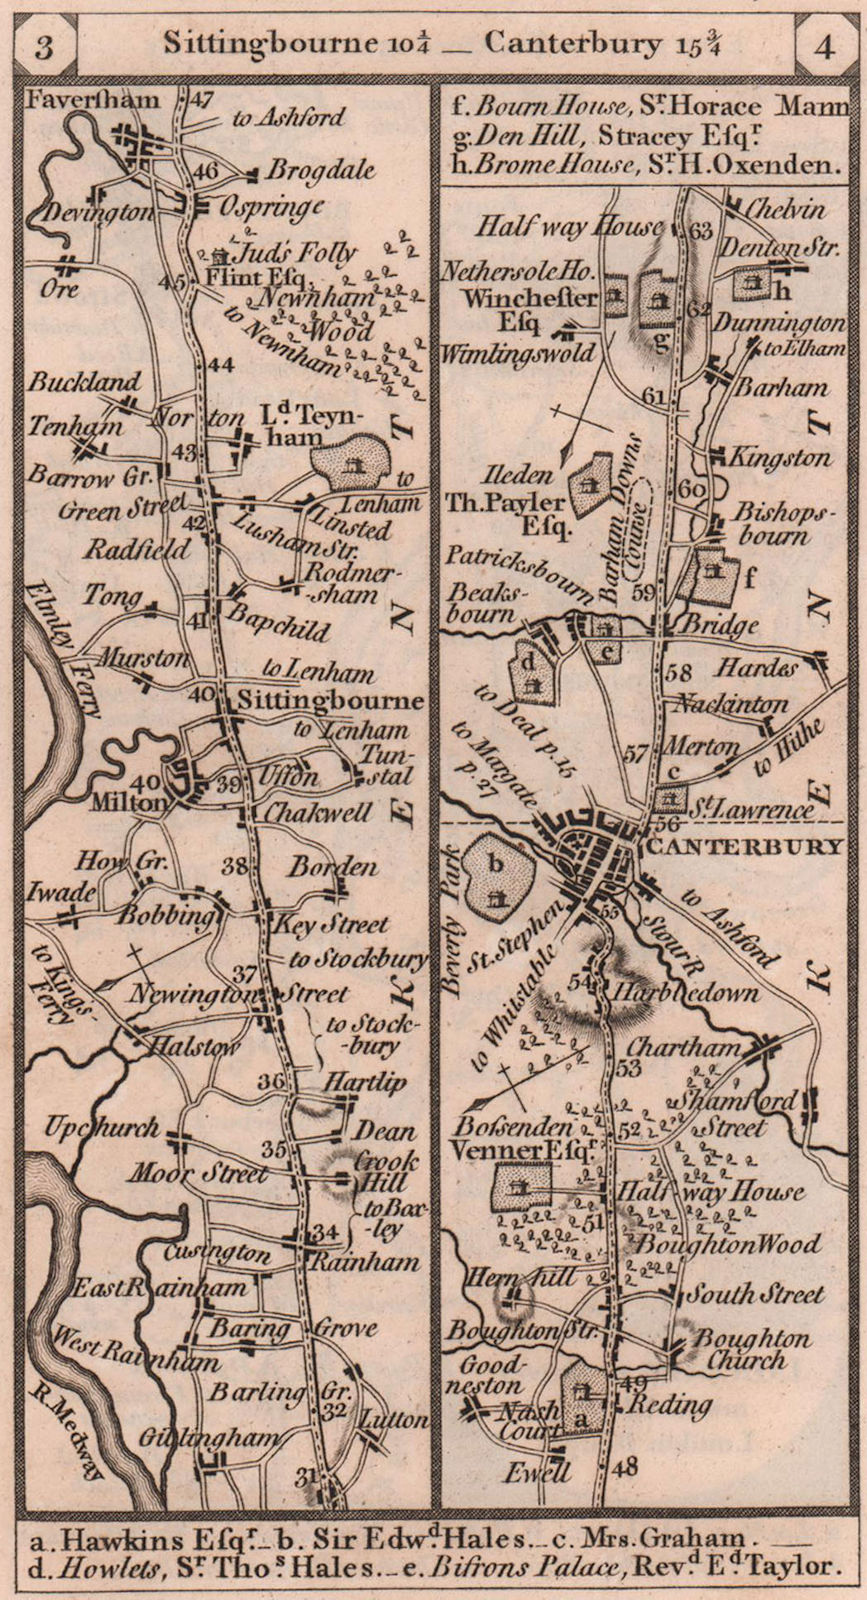 Rainham-Sittingbourne-Faversham-Canterbury road strip map PATERSON 1803